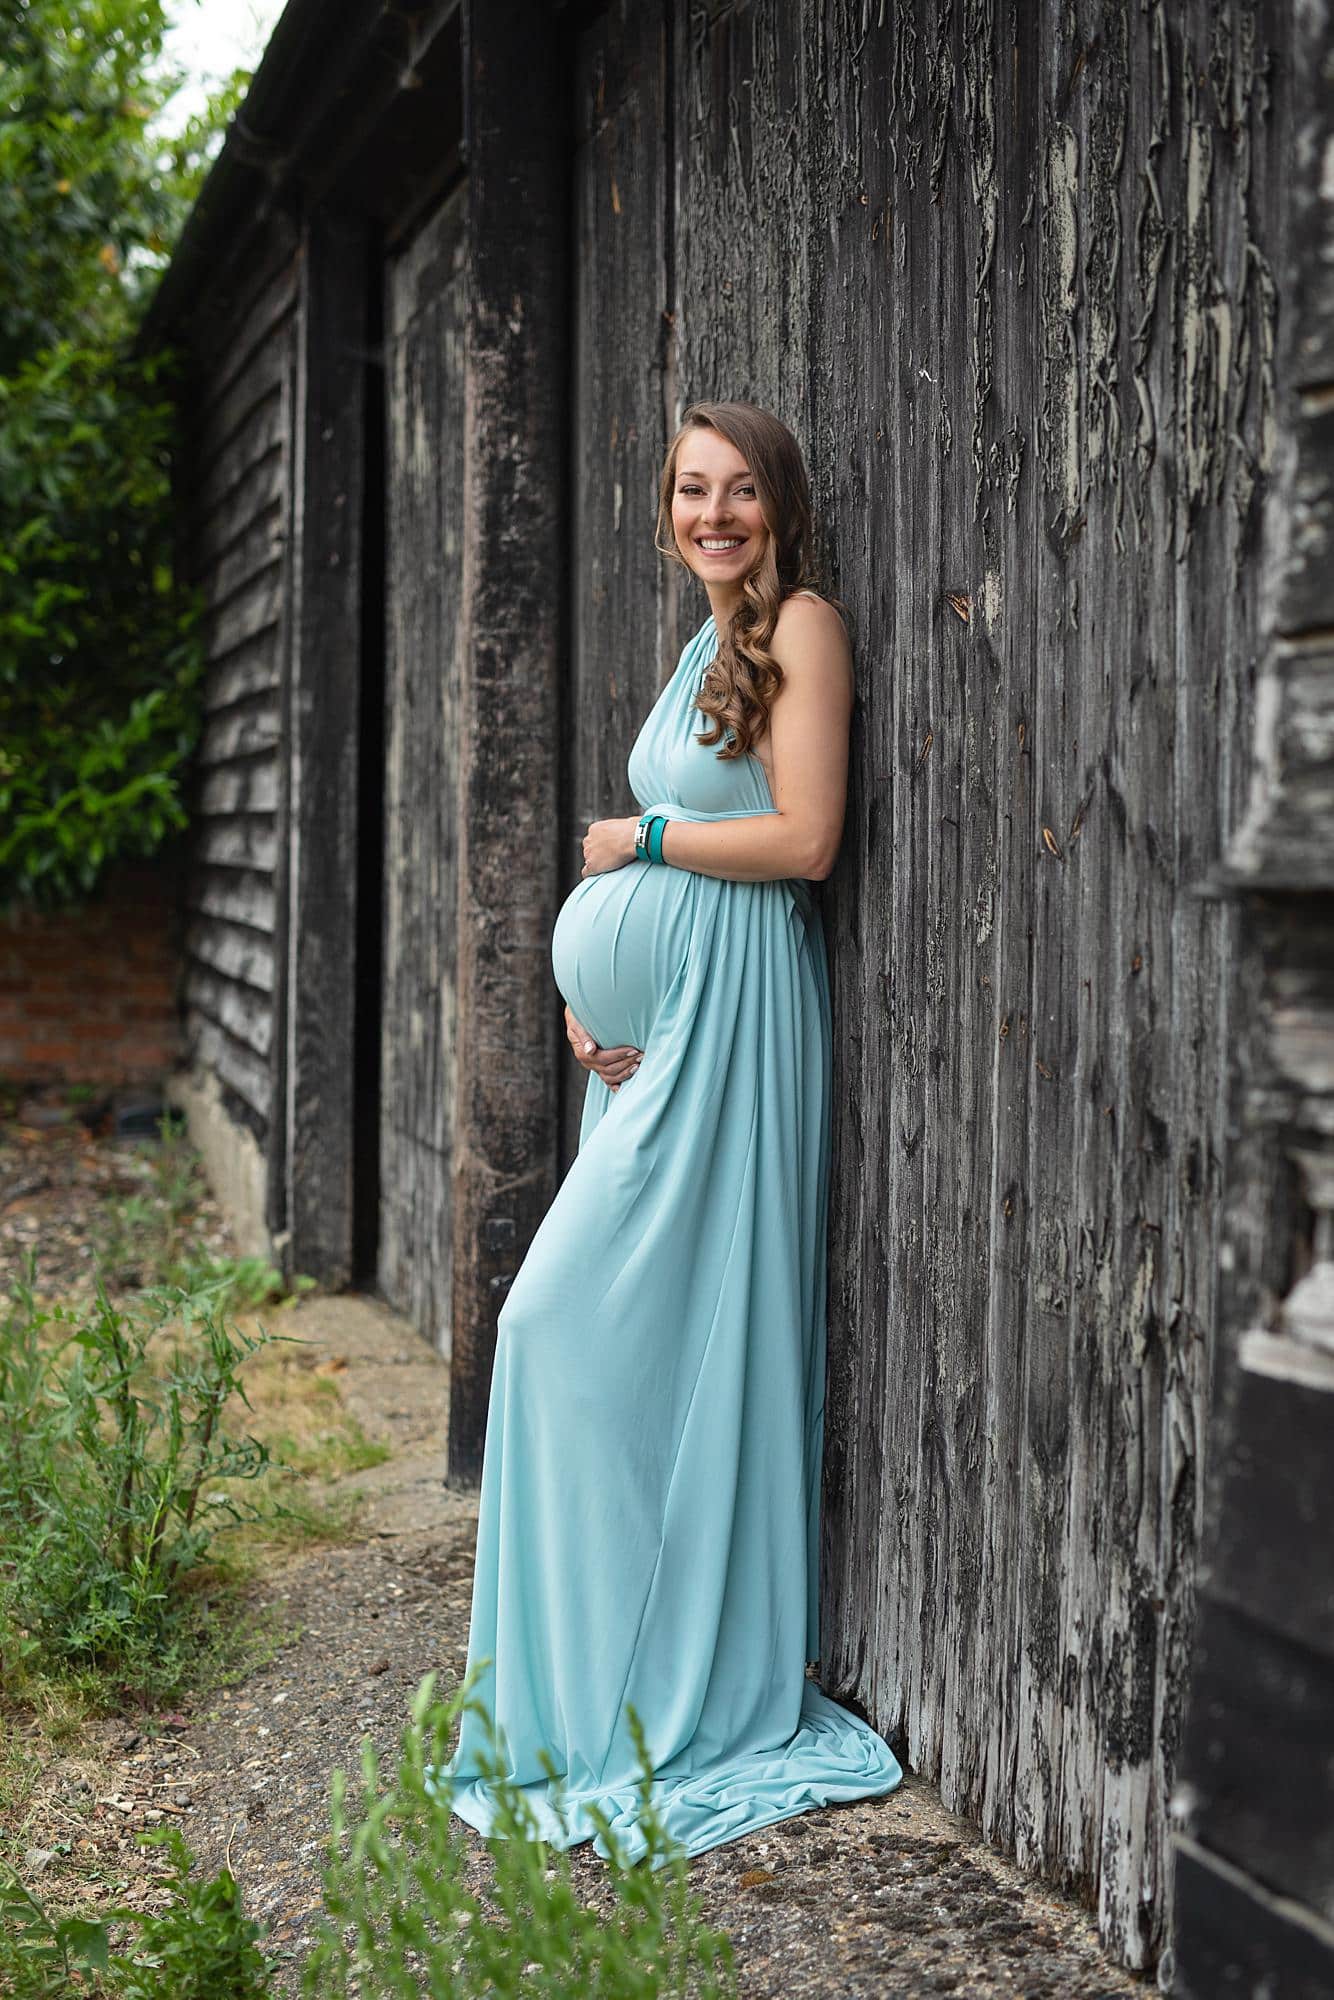 Maternity Photography | Couple Photo Poses | Baby Bump Photoshoot | Simple  & Unique photo ideas - YouTube